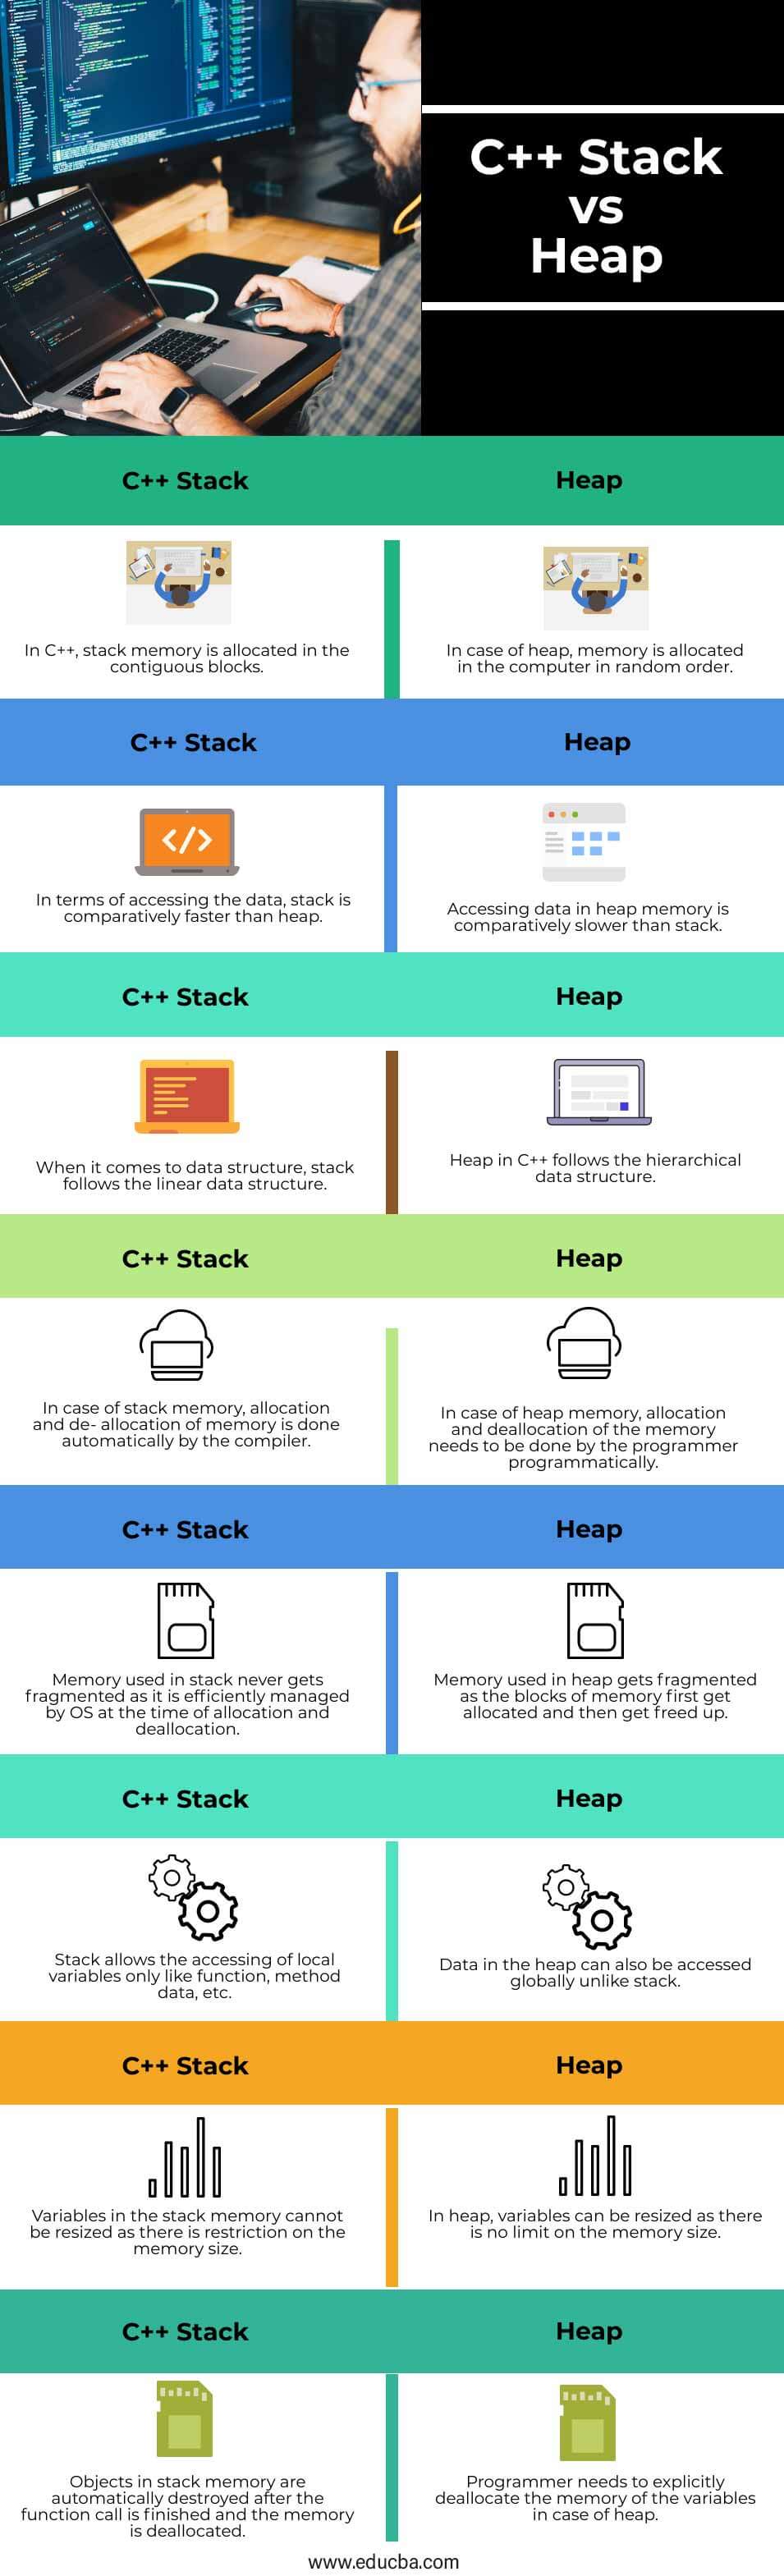 C++-Stack-vs-Heap-info